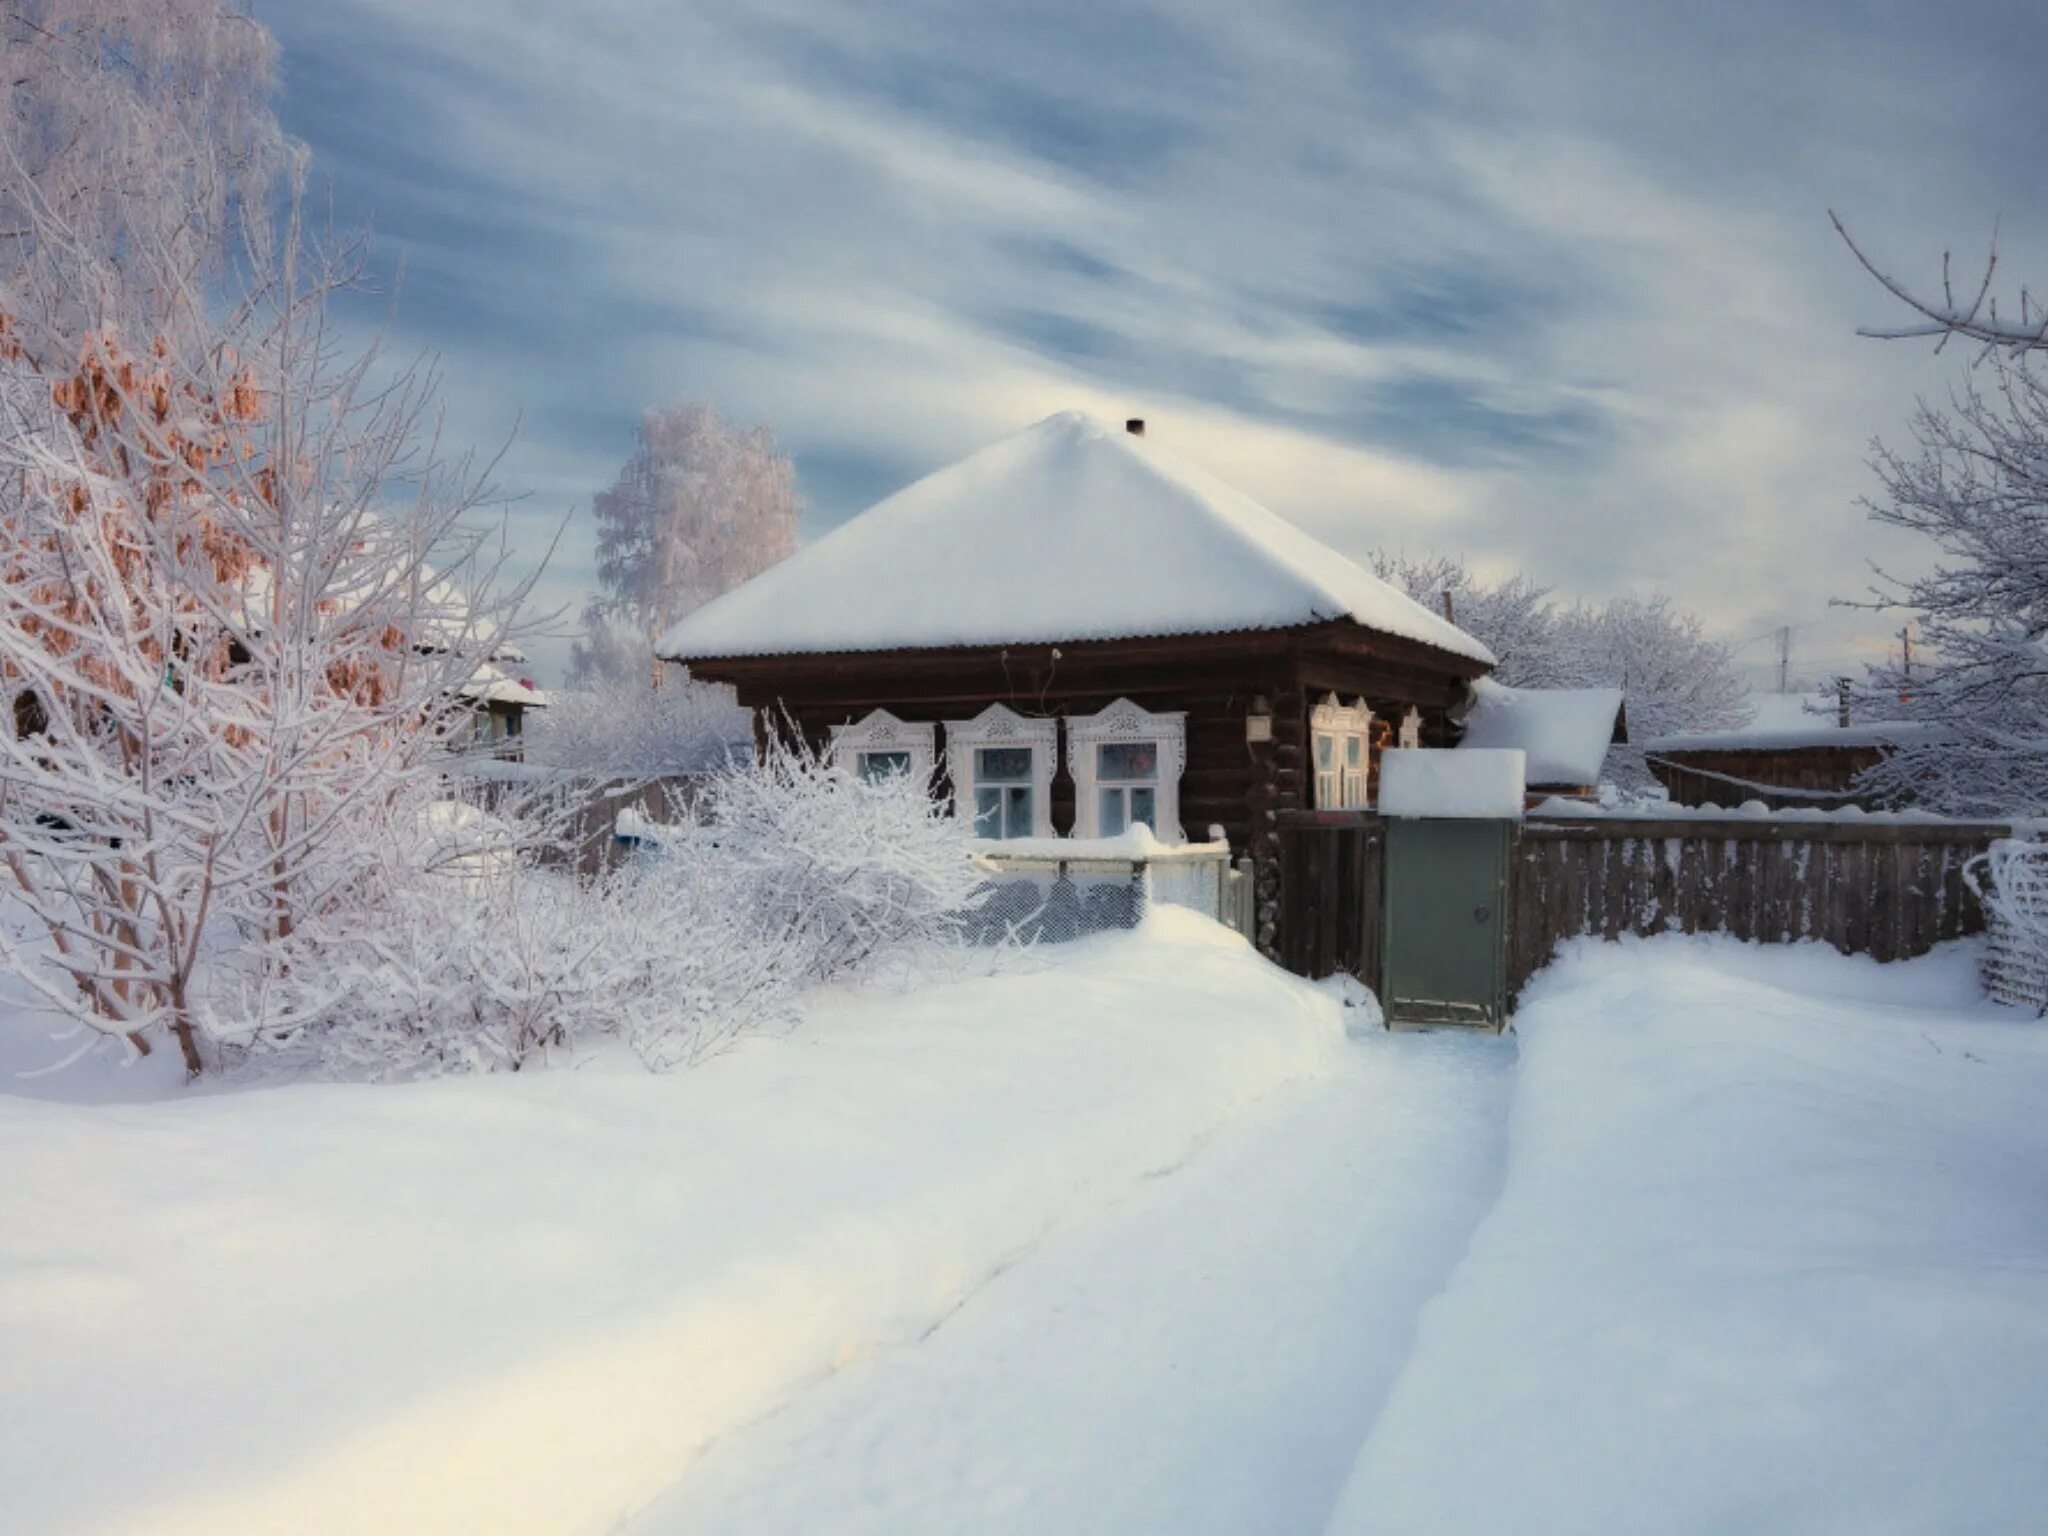 Сяду в сугроб. Зима в деревне. Зимняя деревня. Заснеженный двор в деревне. Деревенский домик в снегу.